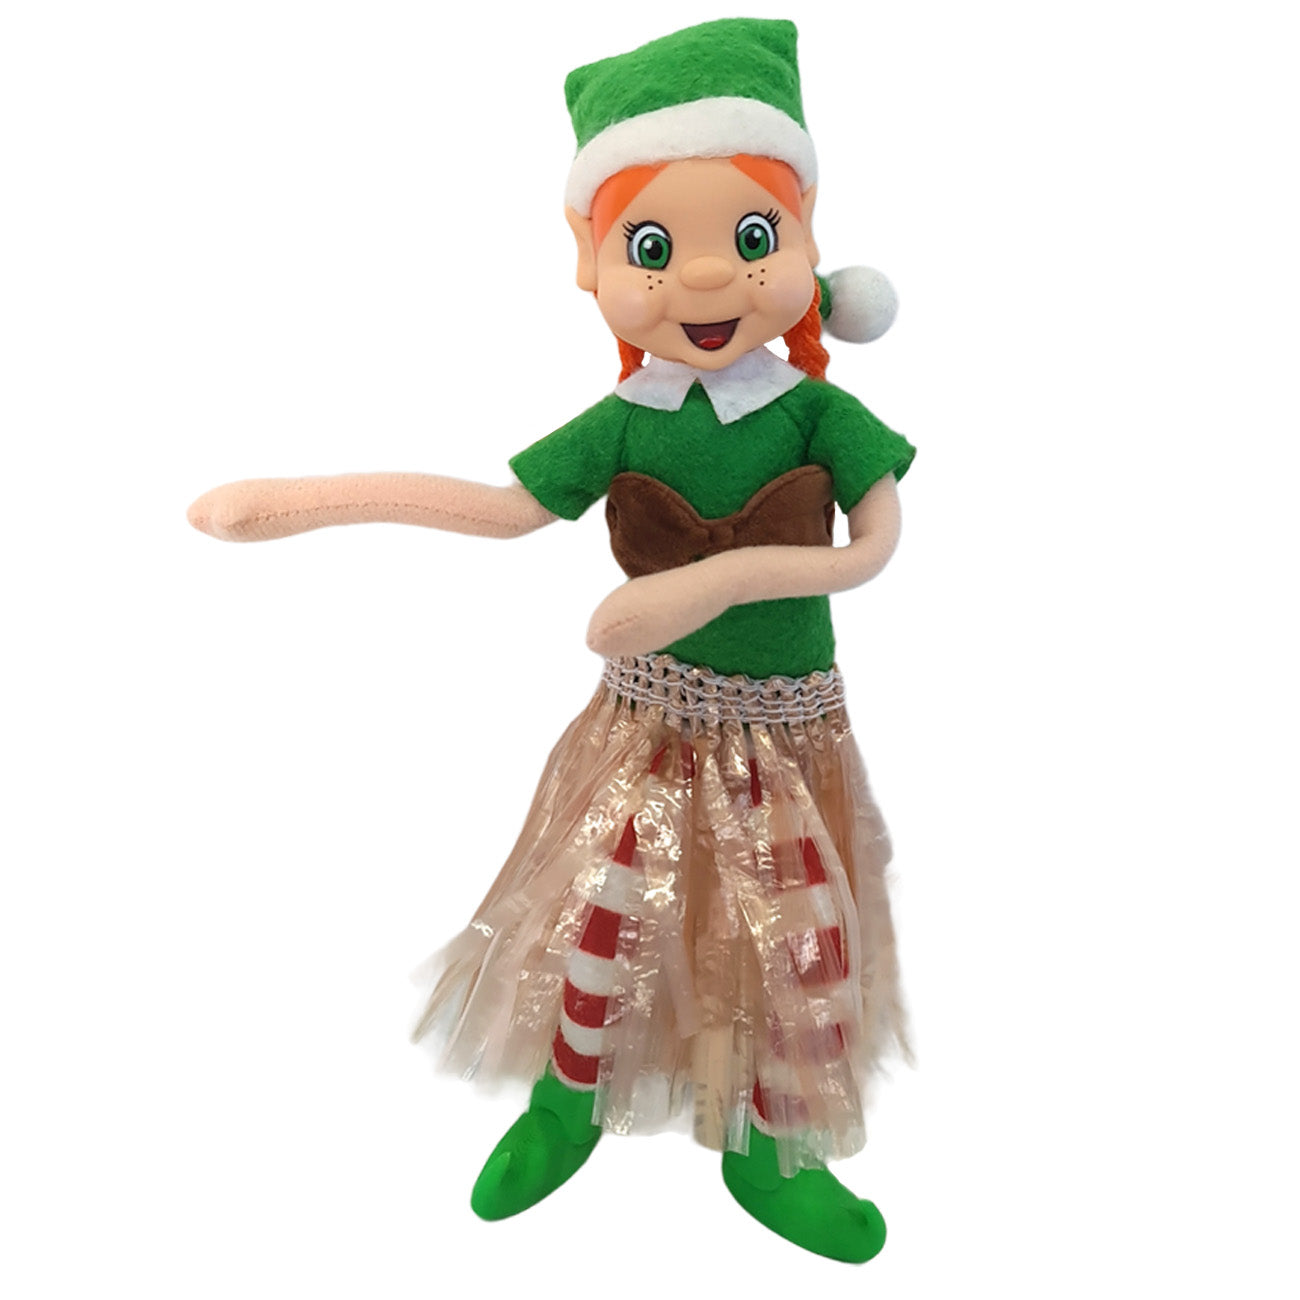 Elf wearing a hula costume